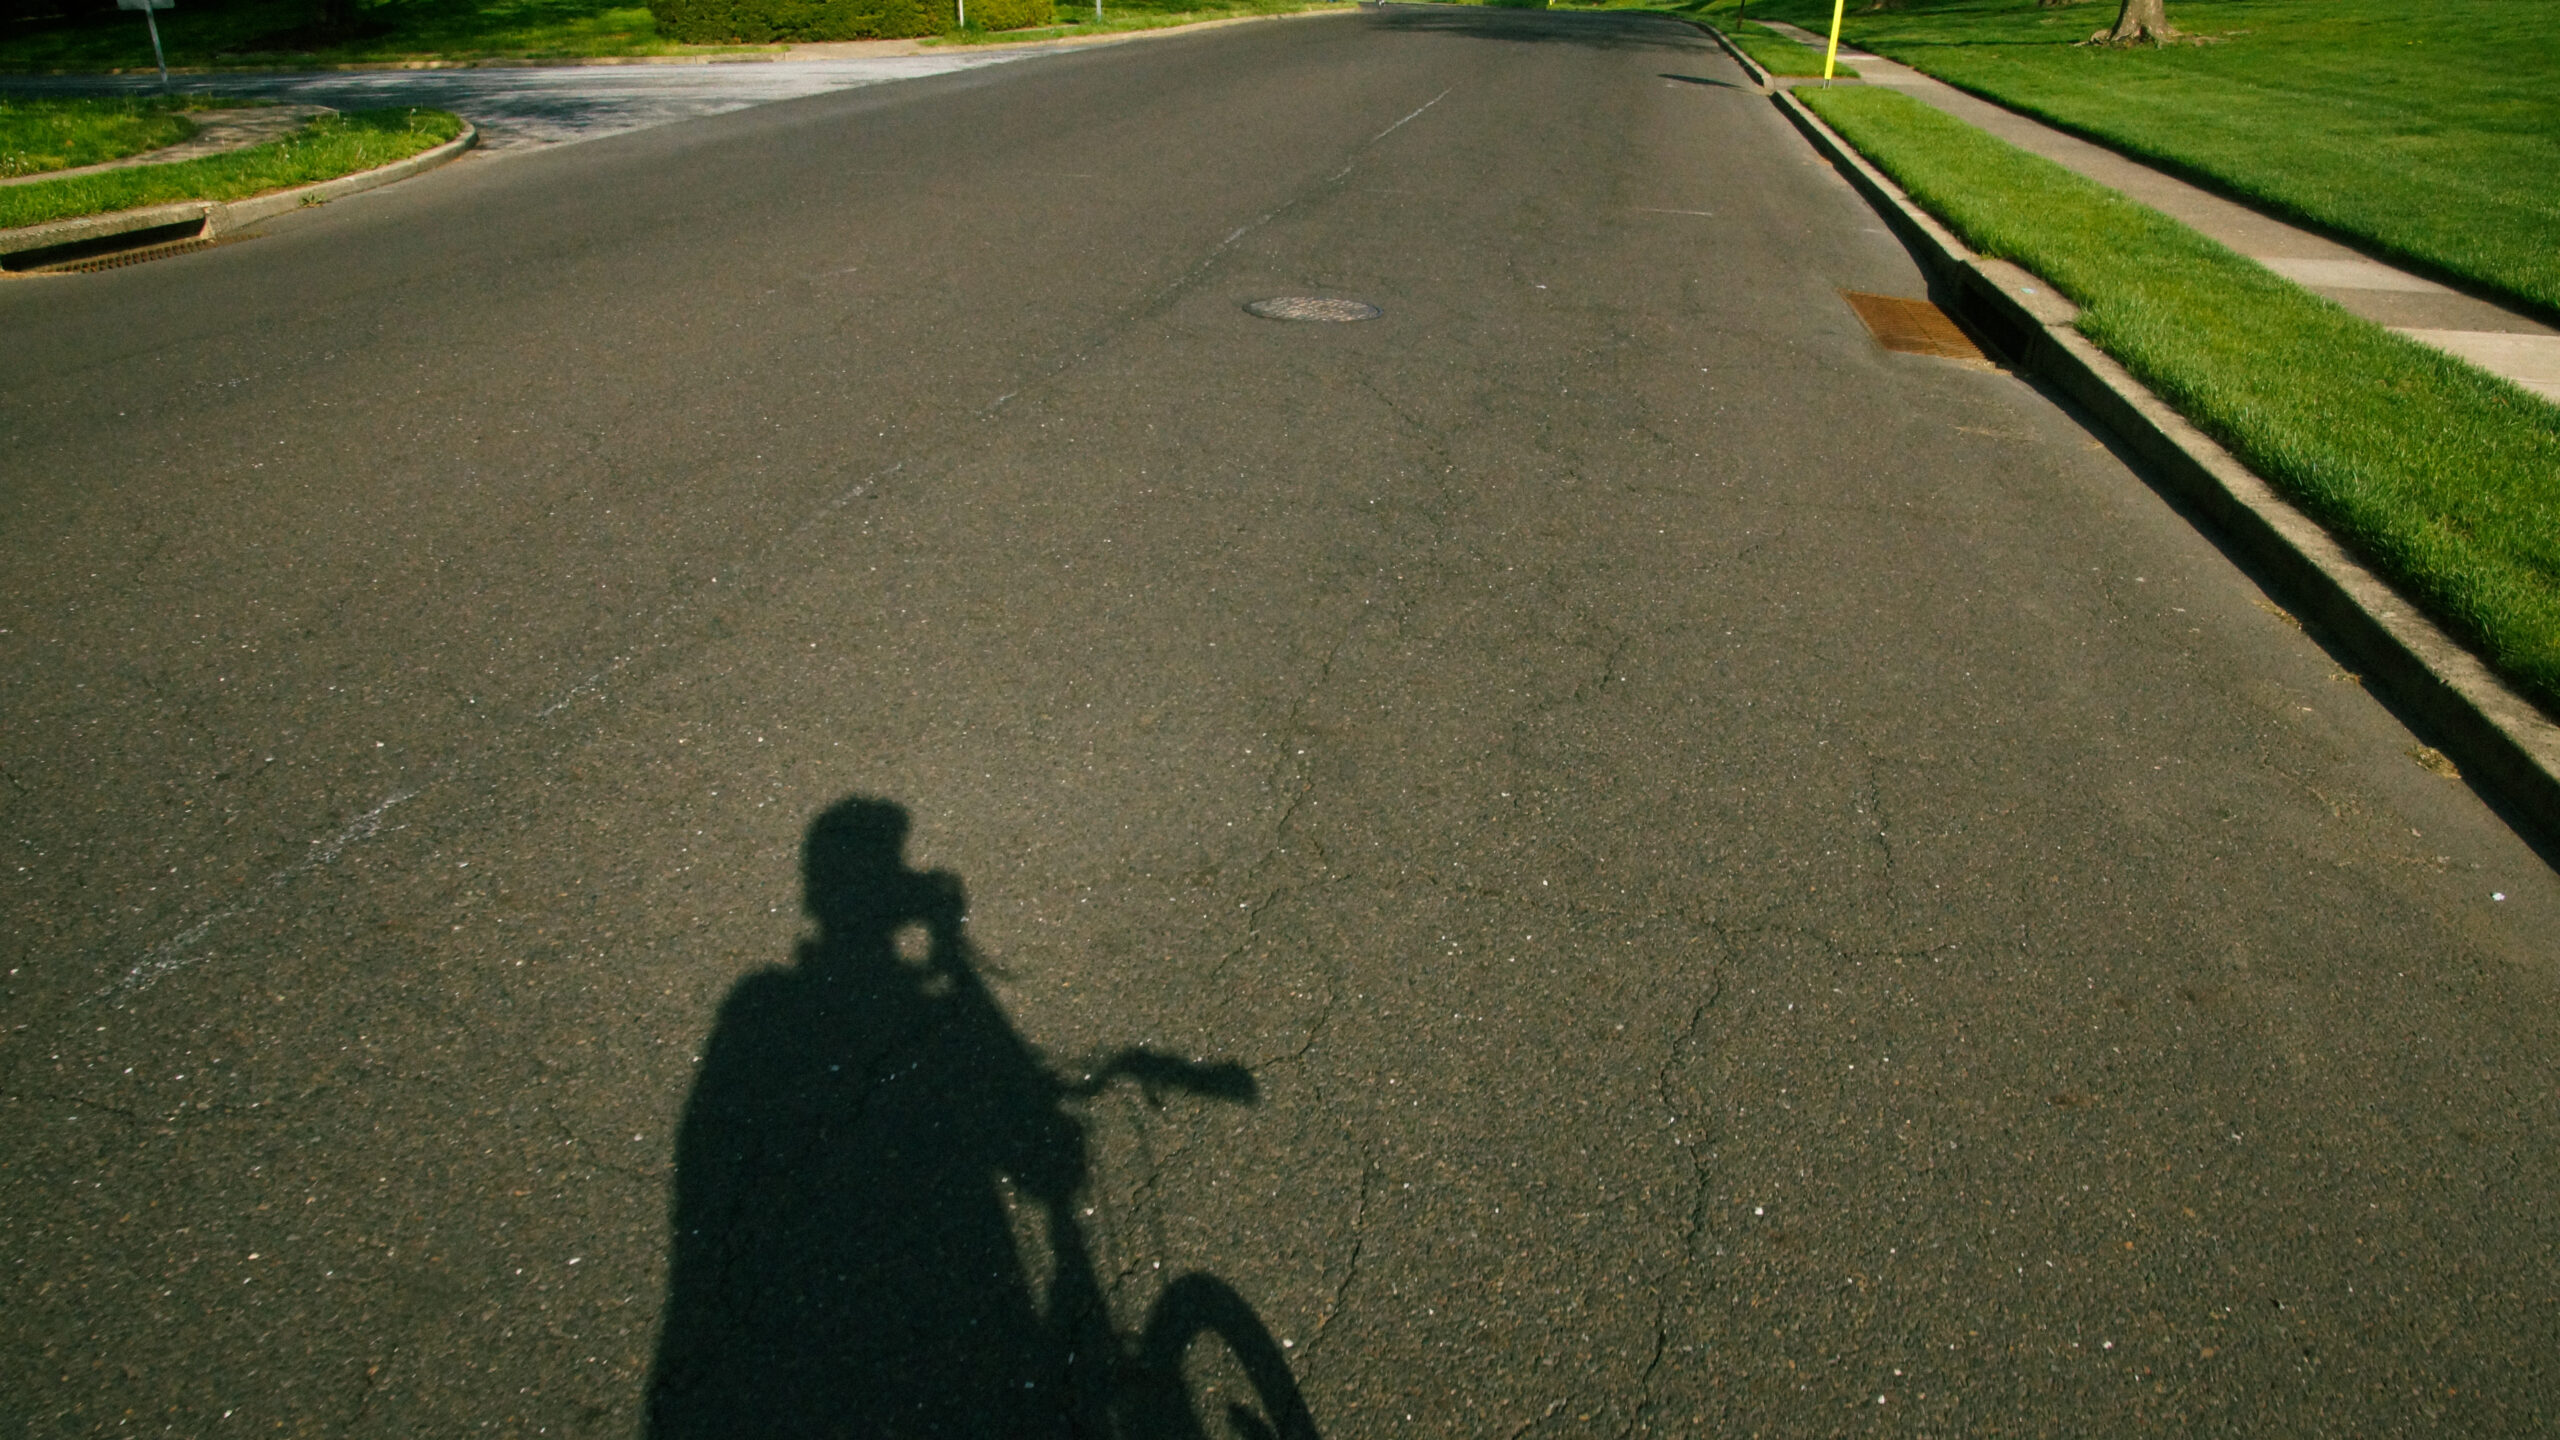 A self portrait depicting my shadow as I ride a bike around my neighborhood taking photographs.